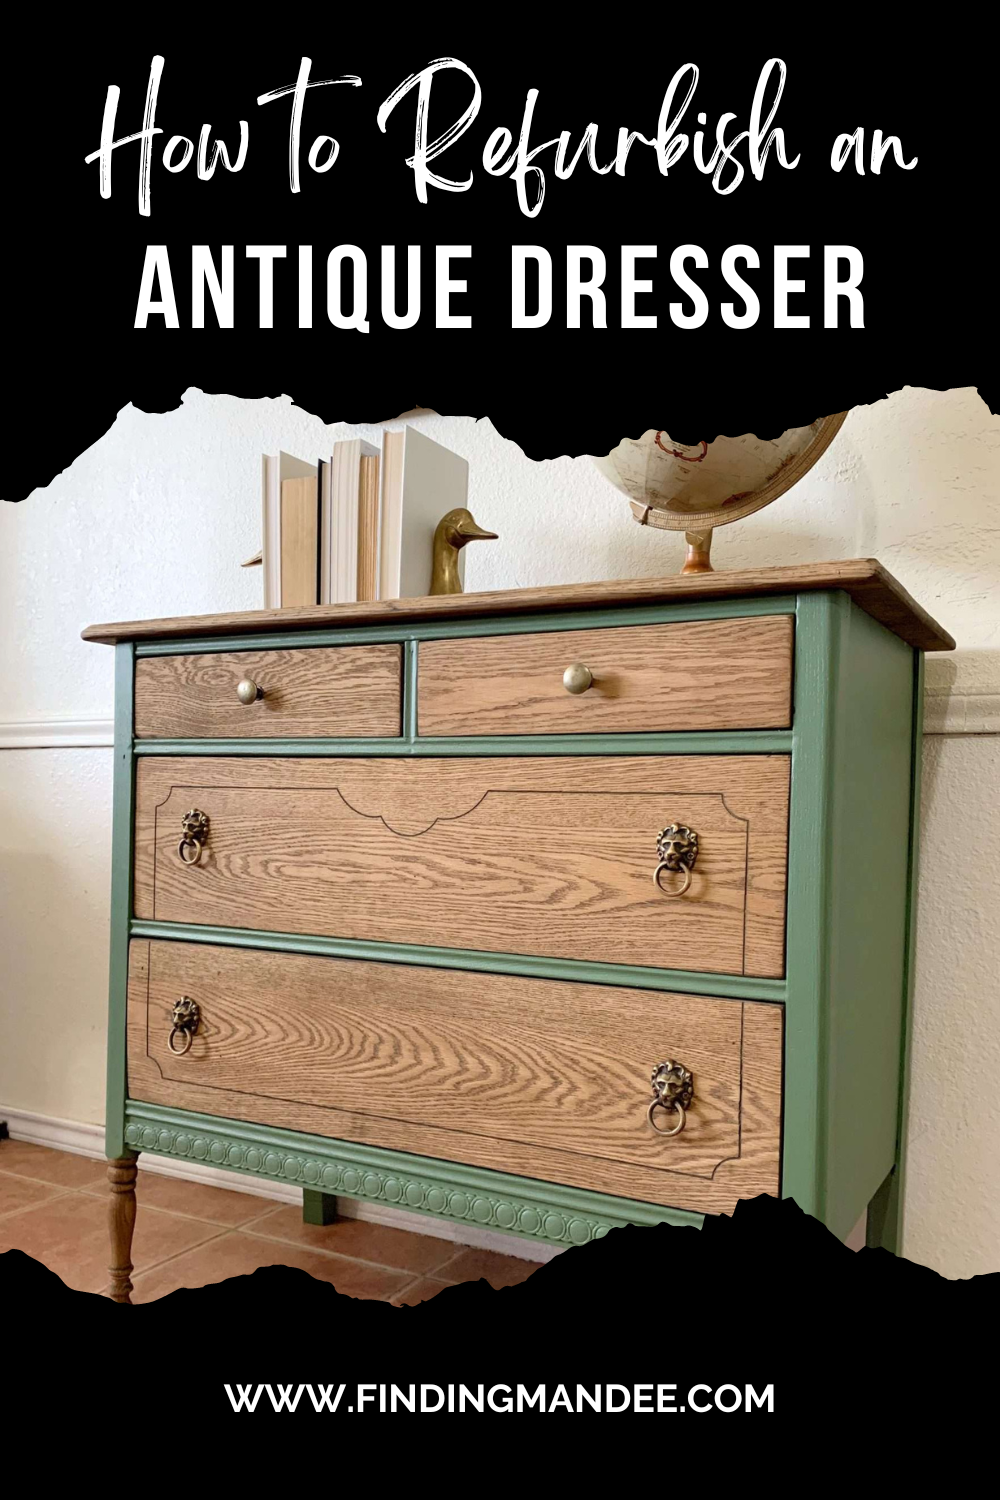 How to Refurbish an Antique Dresser | Finding Mandee